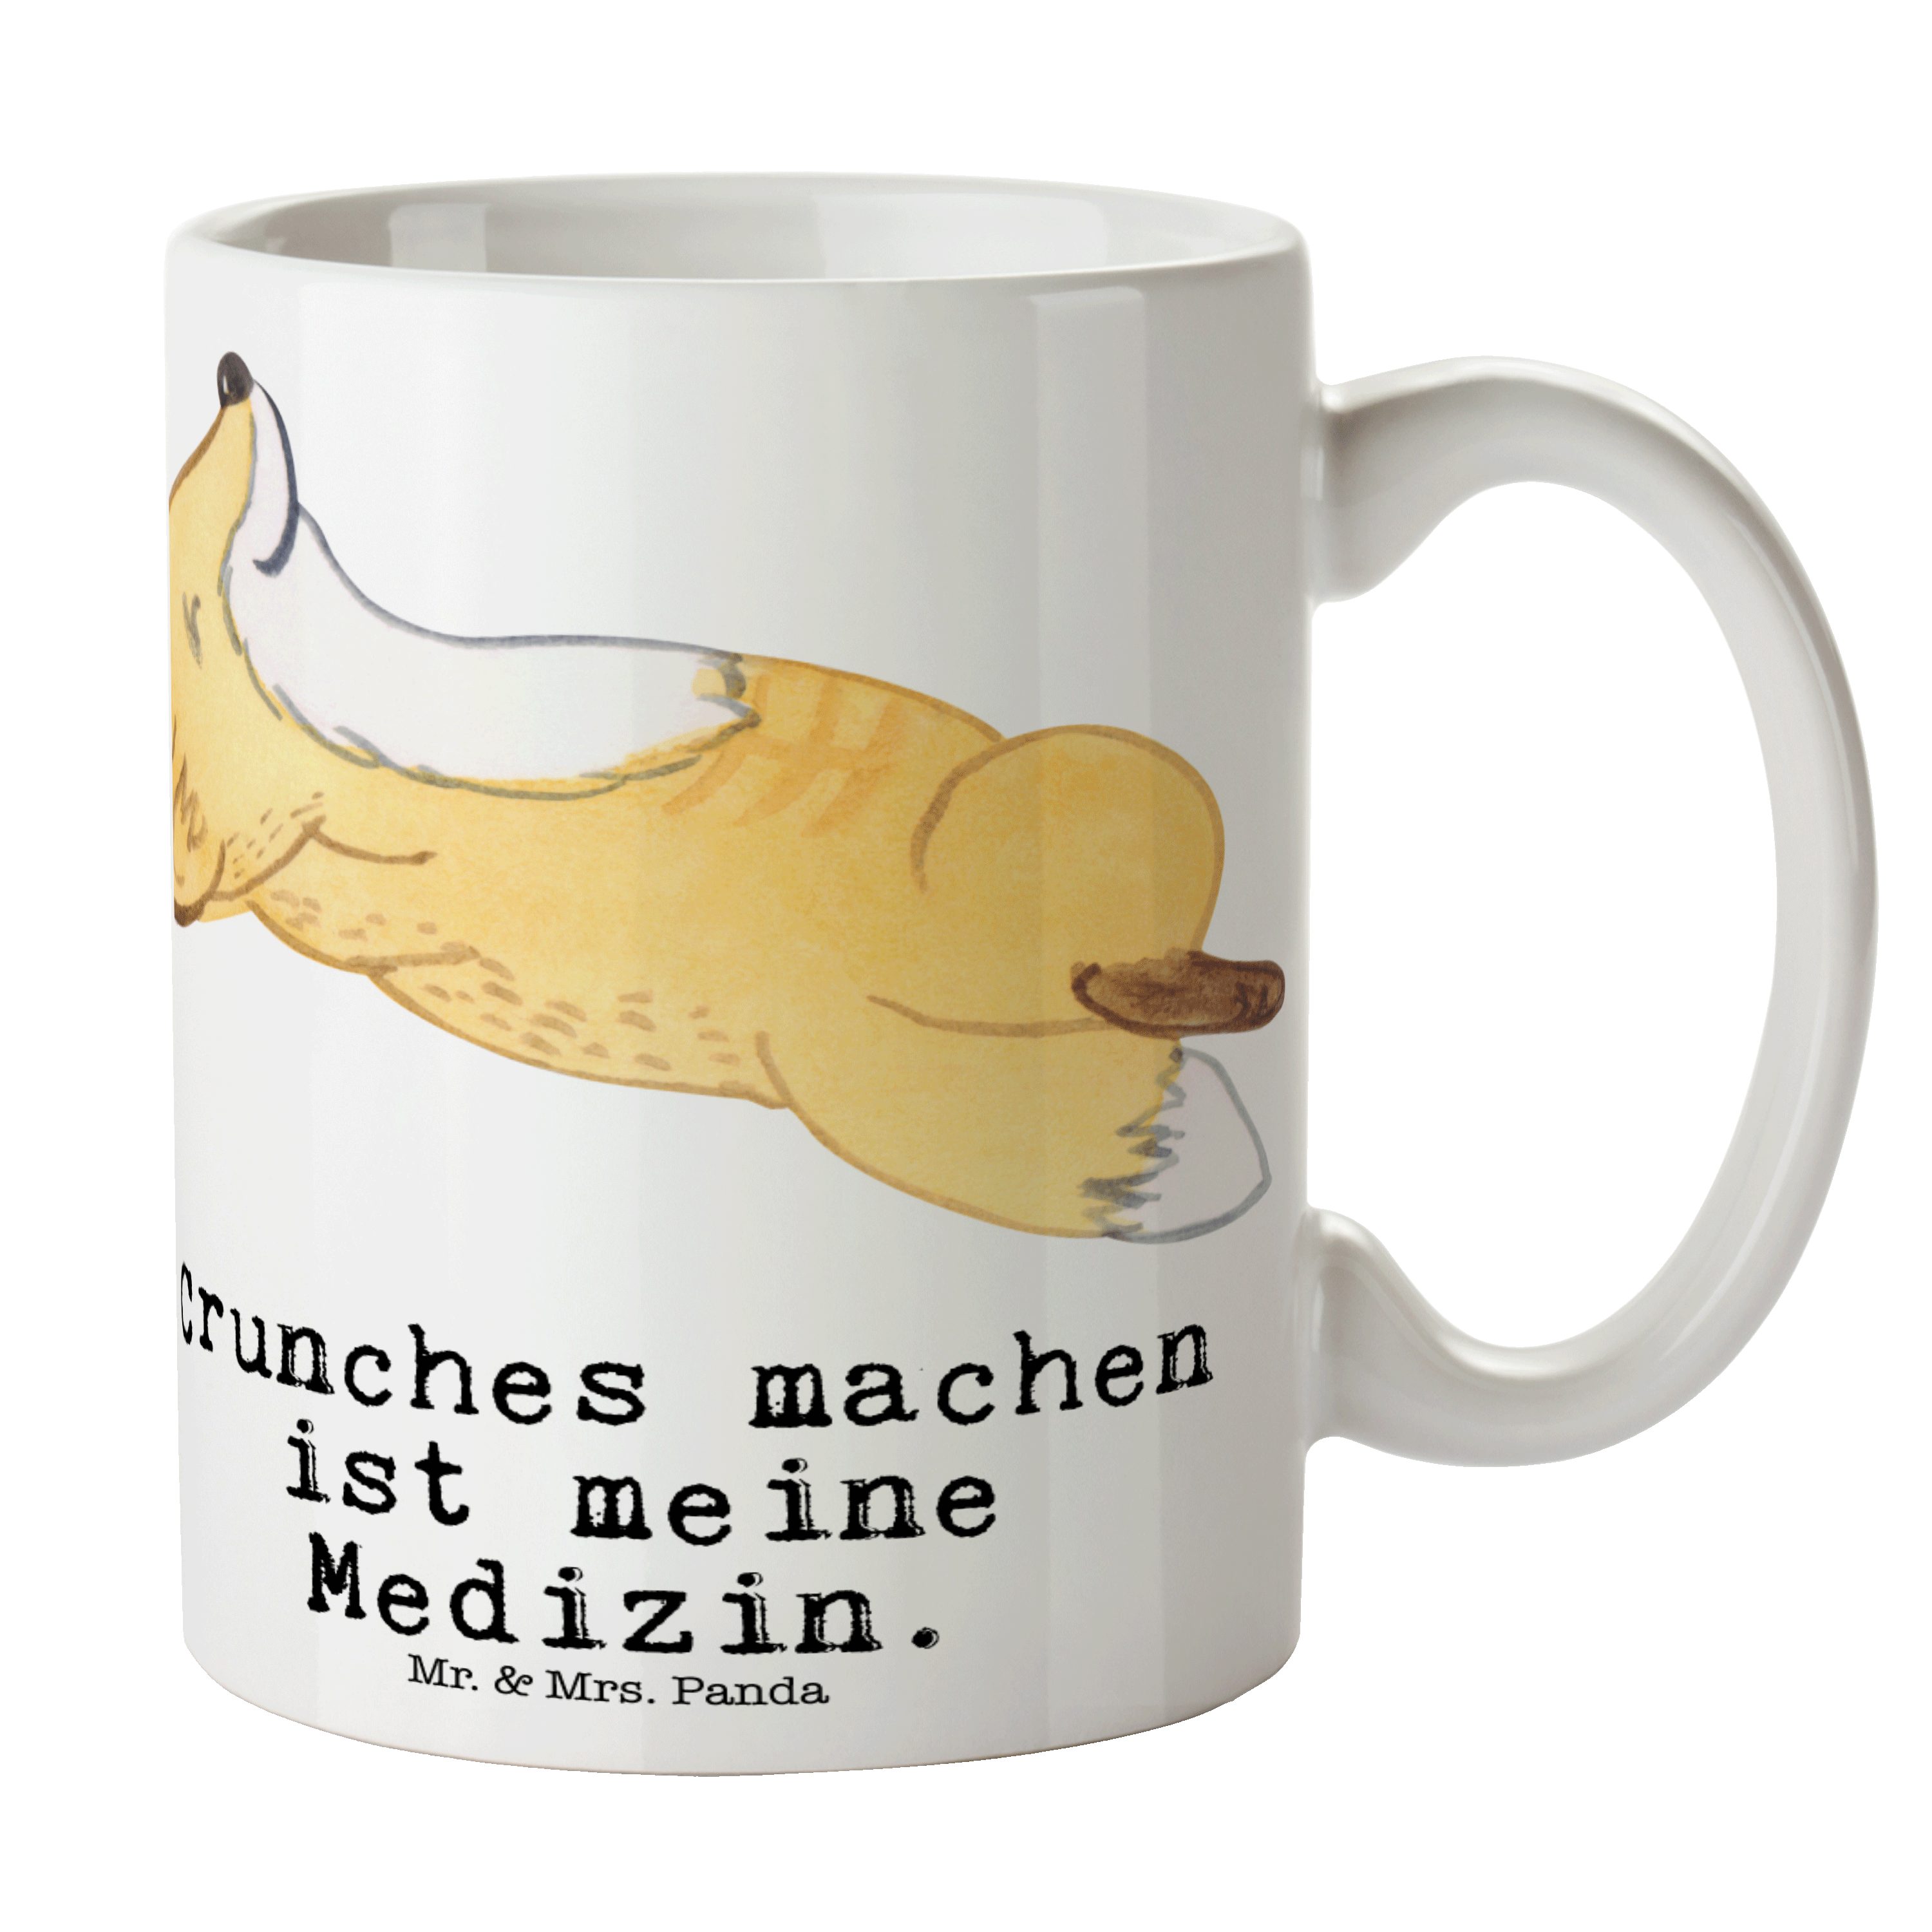 & Mr. - Fuchs Crunches Mrs. Panda Porzellantasse, Tasse Kaffeetasse, Weiß Medizin - Keramik Geschenk,